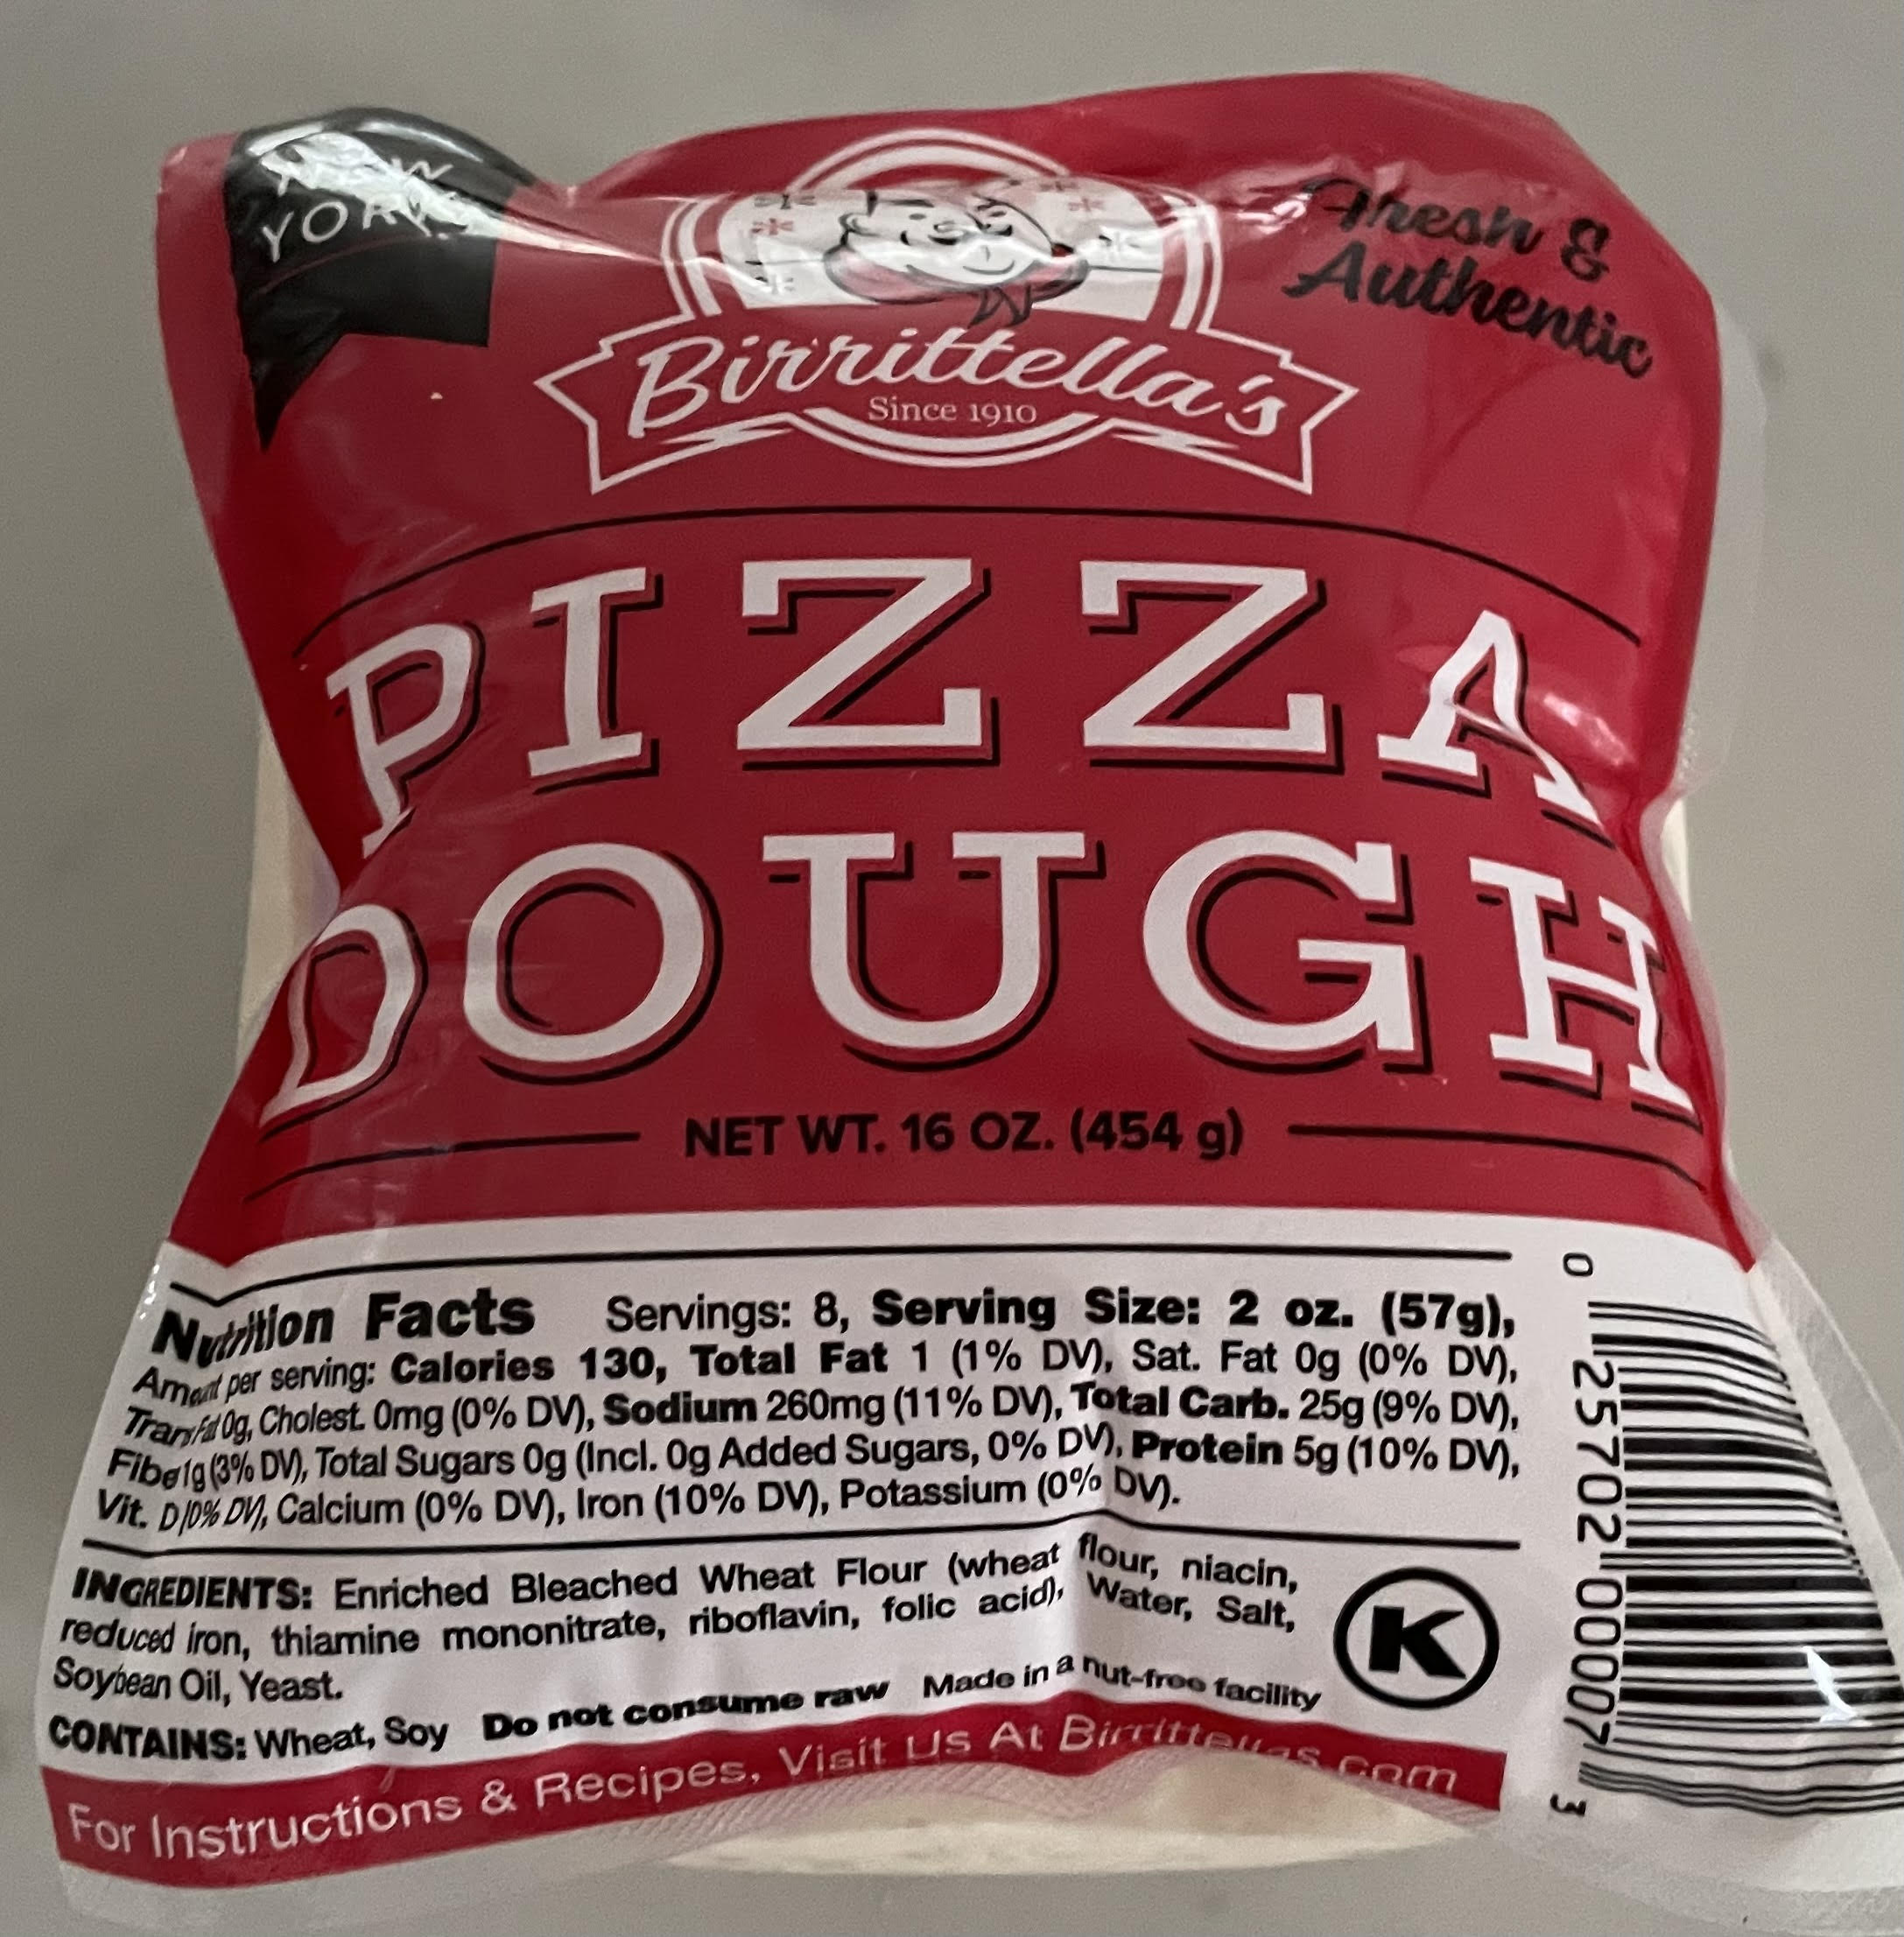 The Birrittella Pizza Dough package